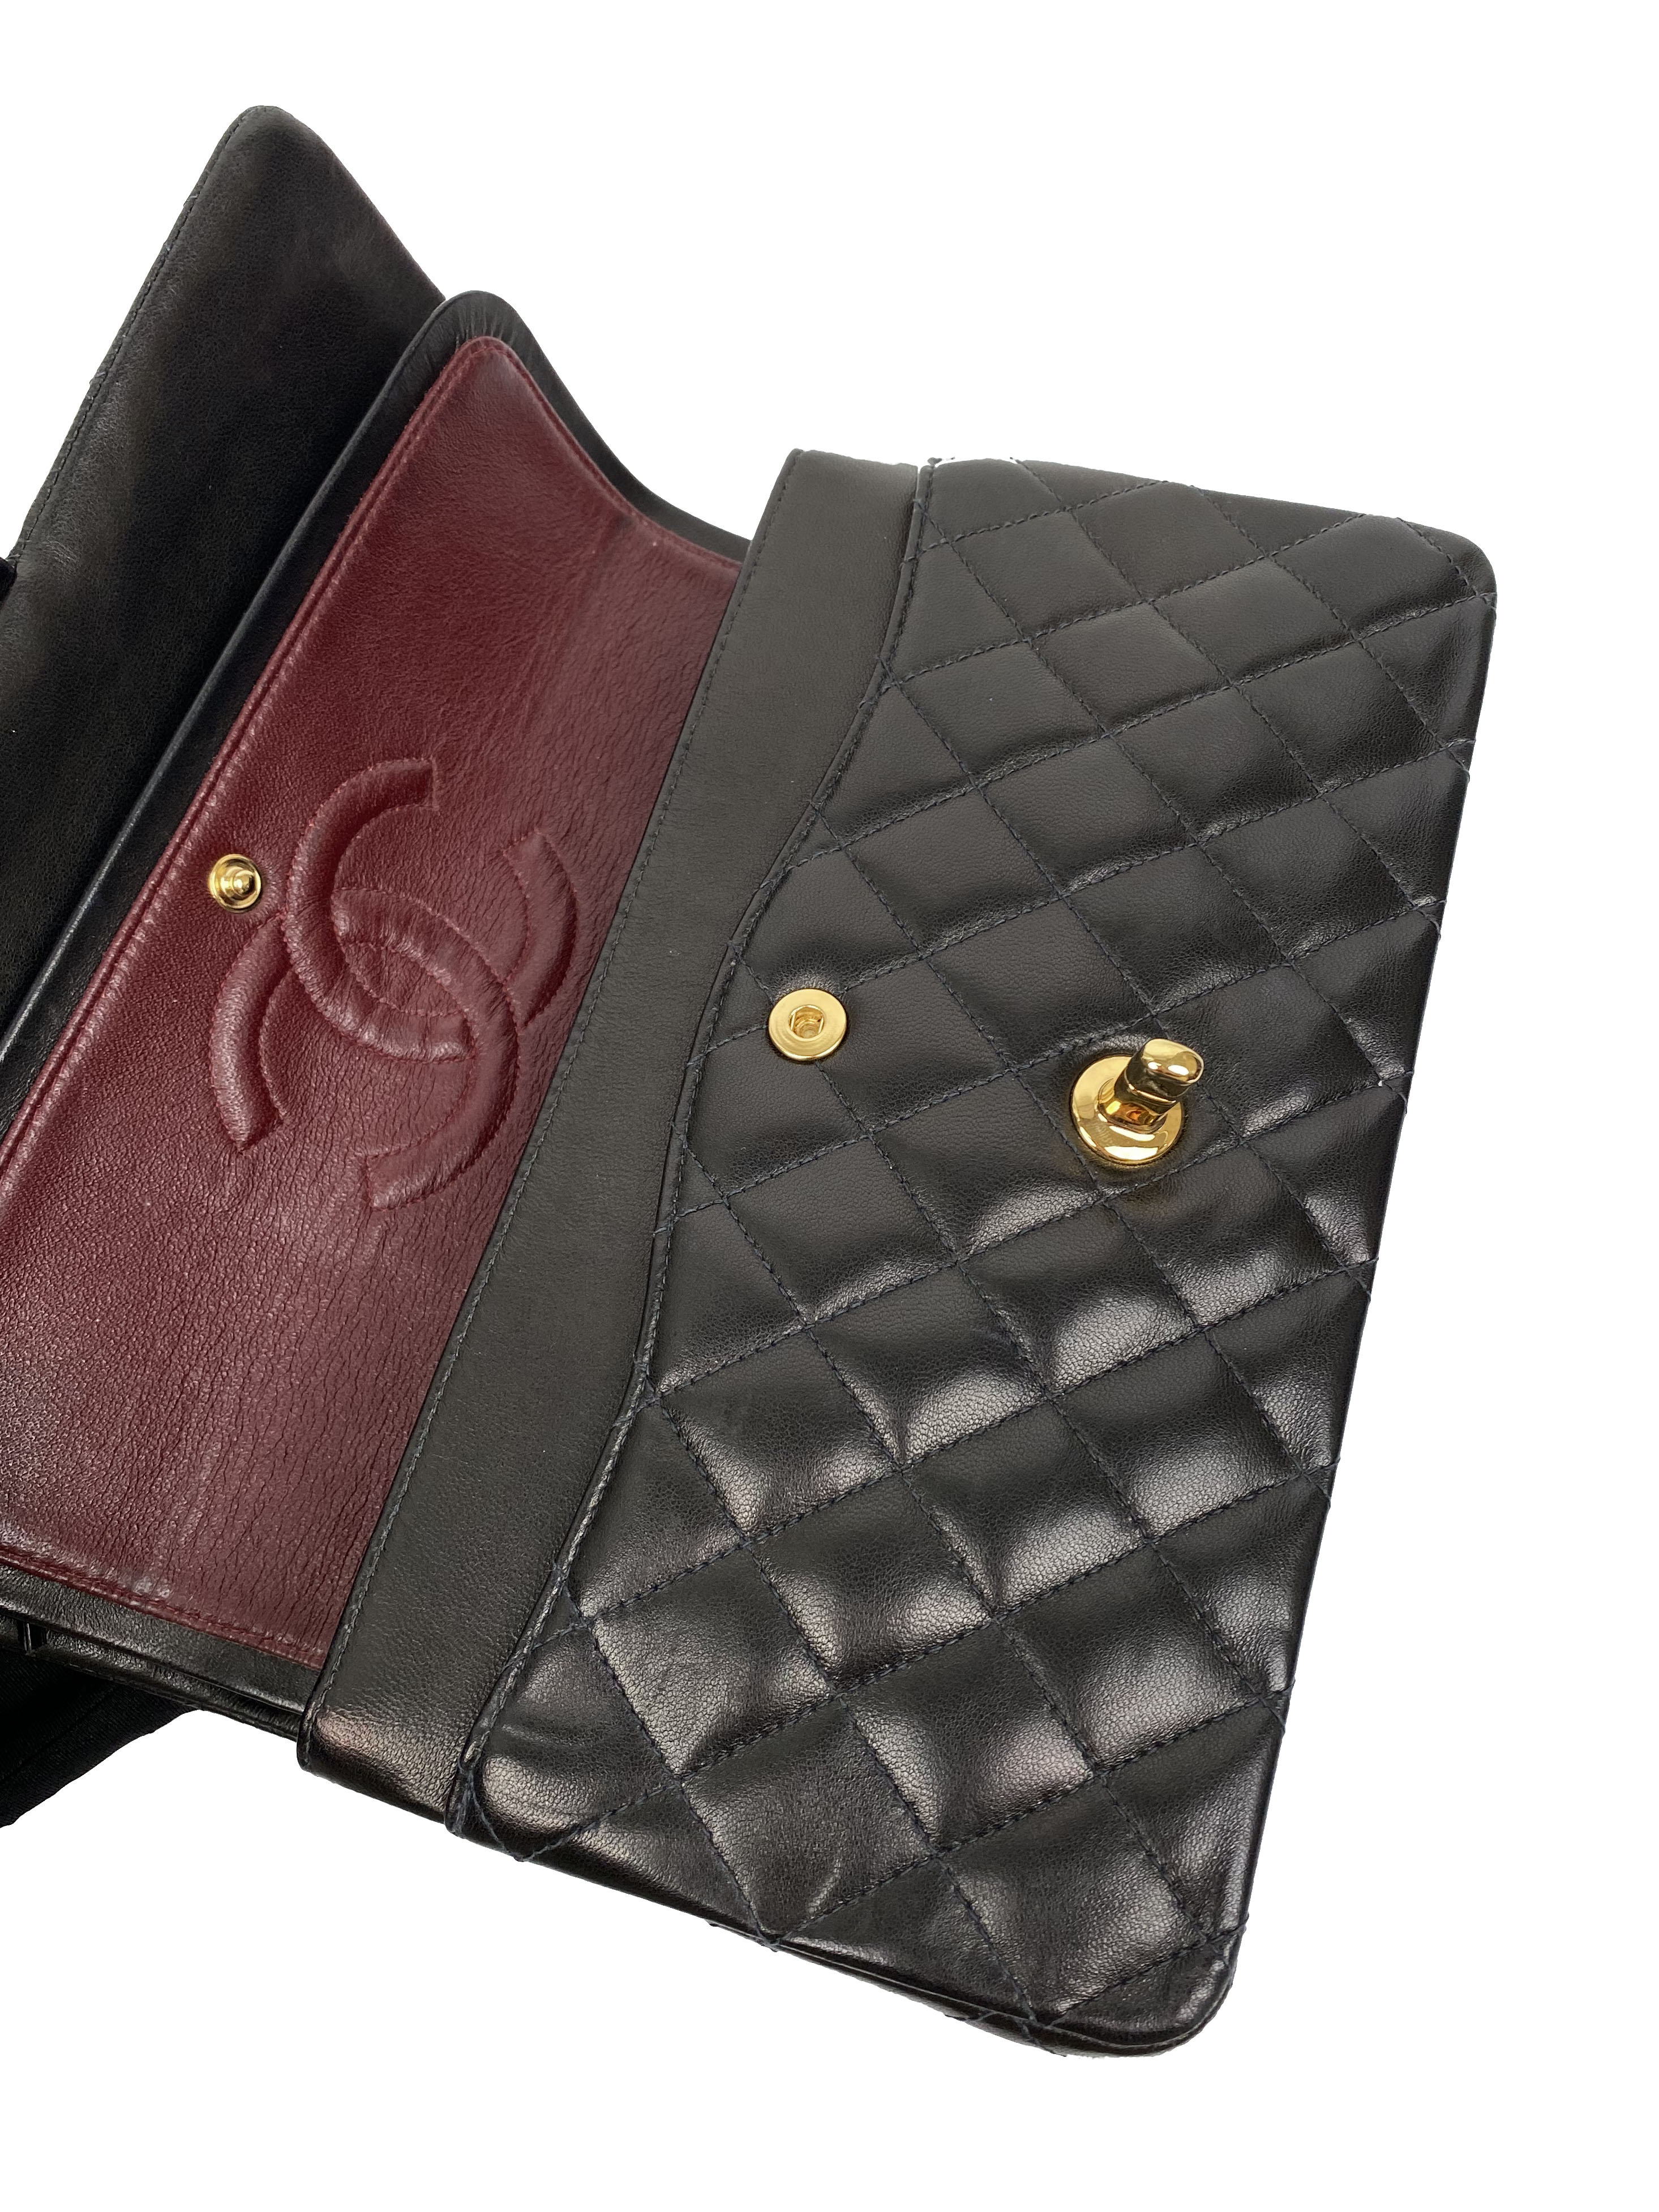 Chanel Medium Black Lambskin Classic Flap Bag